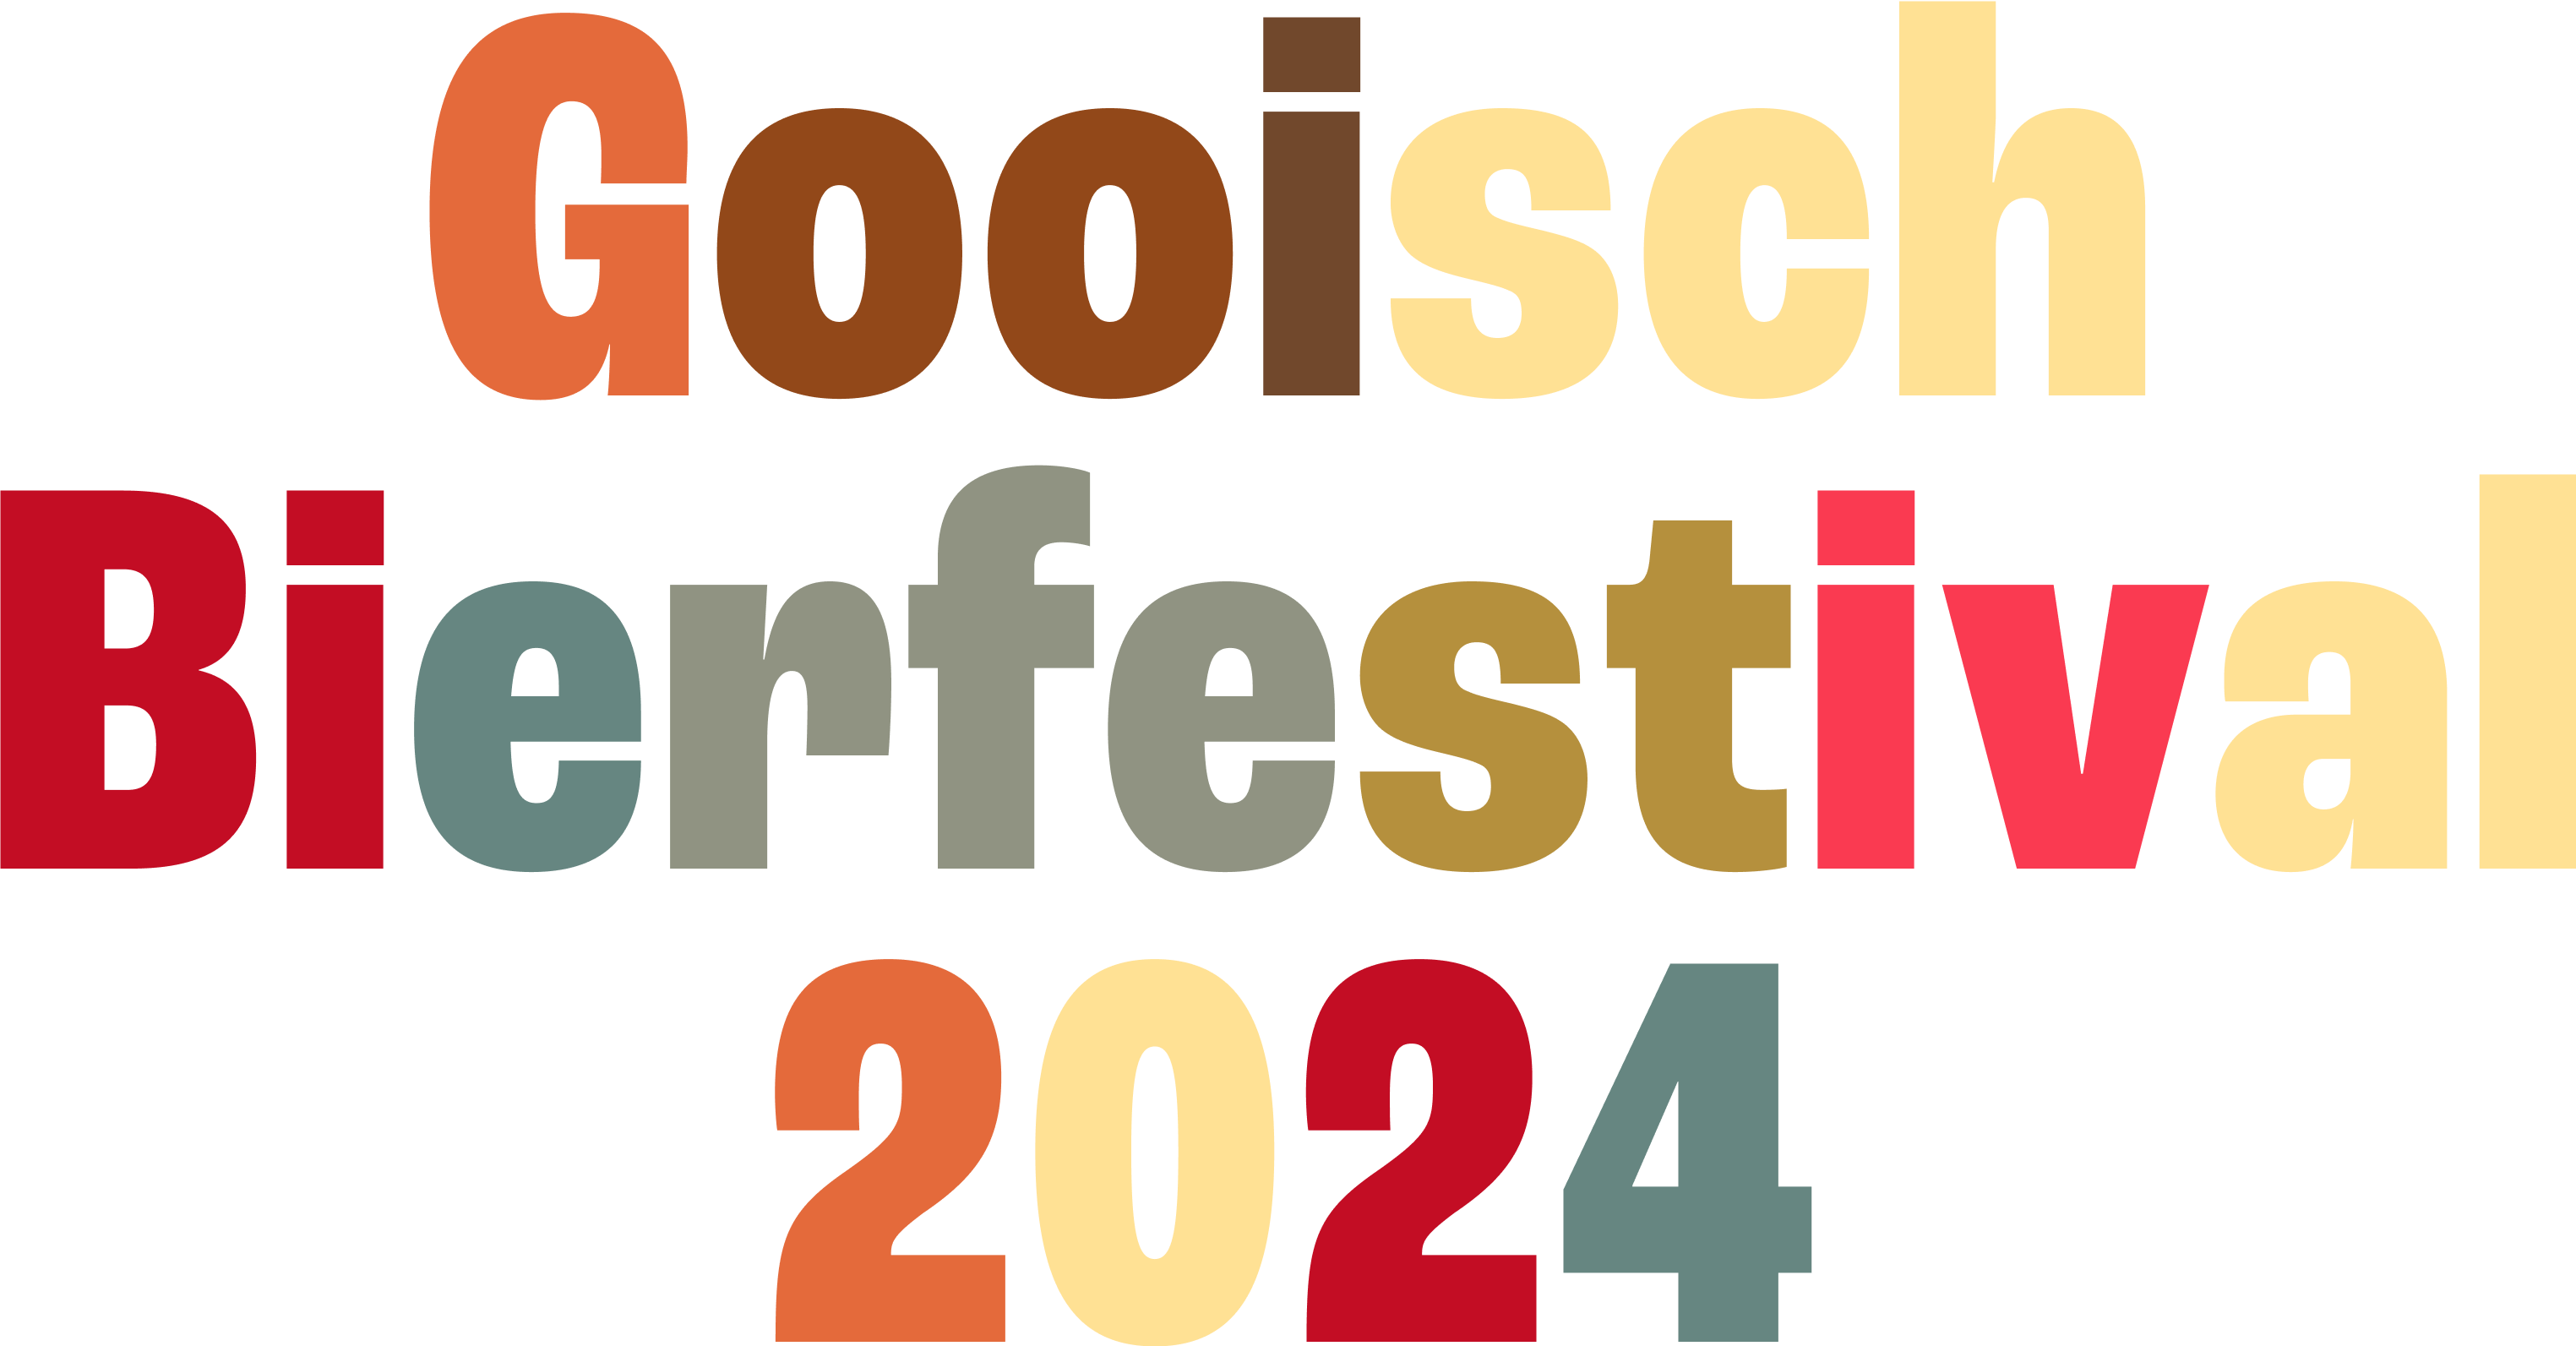 Gooisch Bierfestival 20242